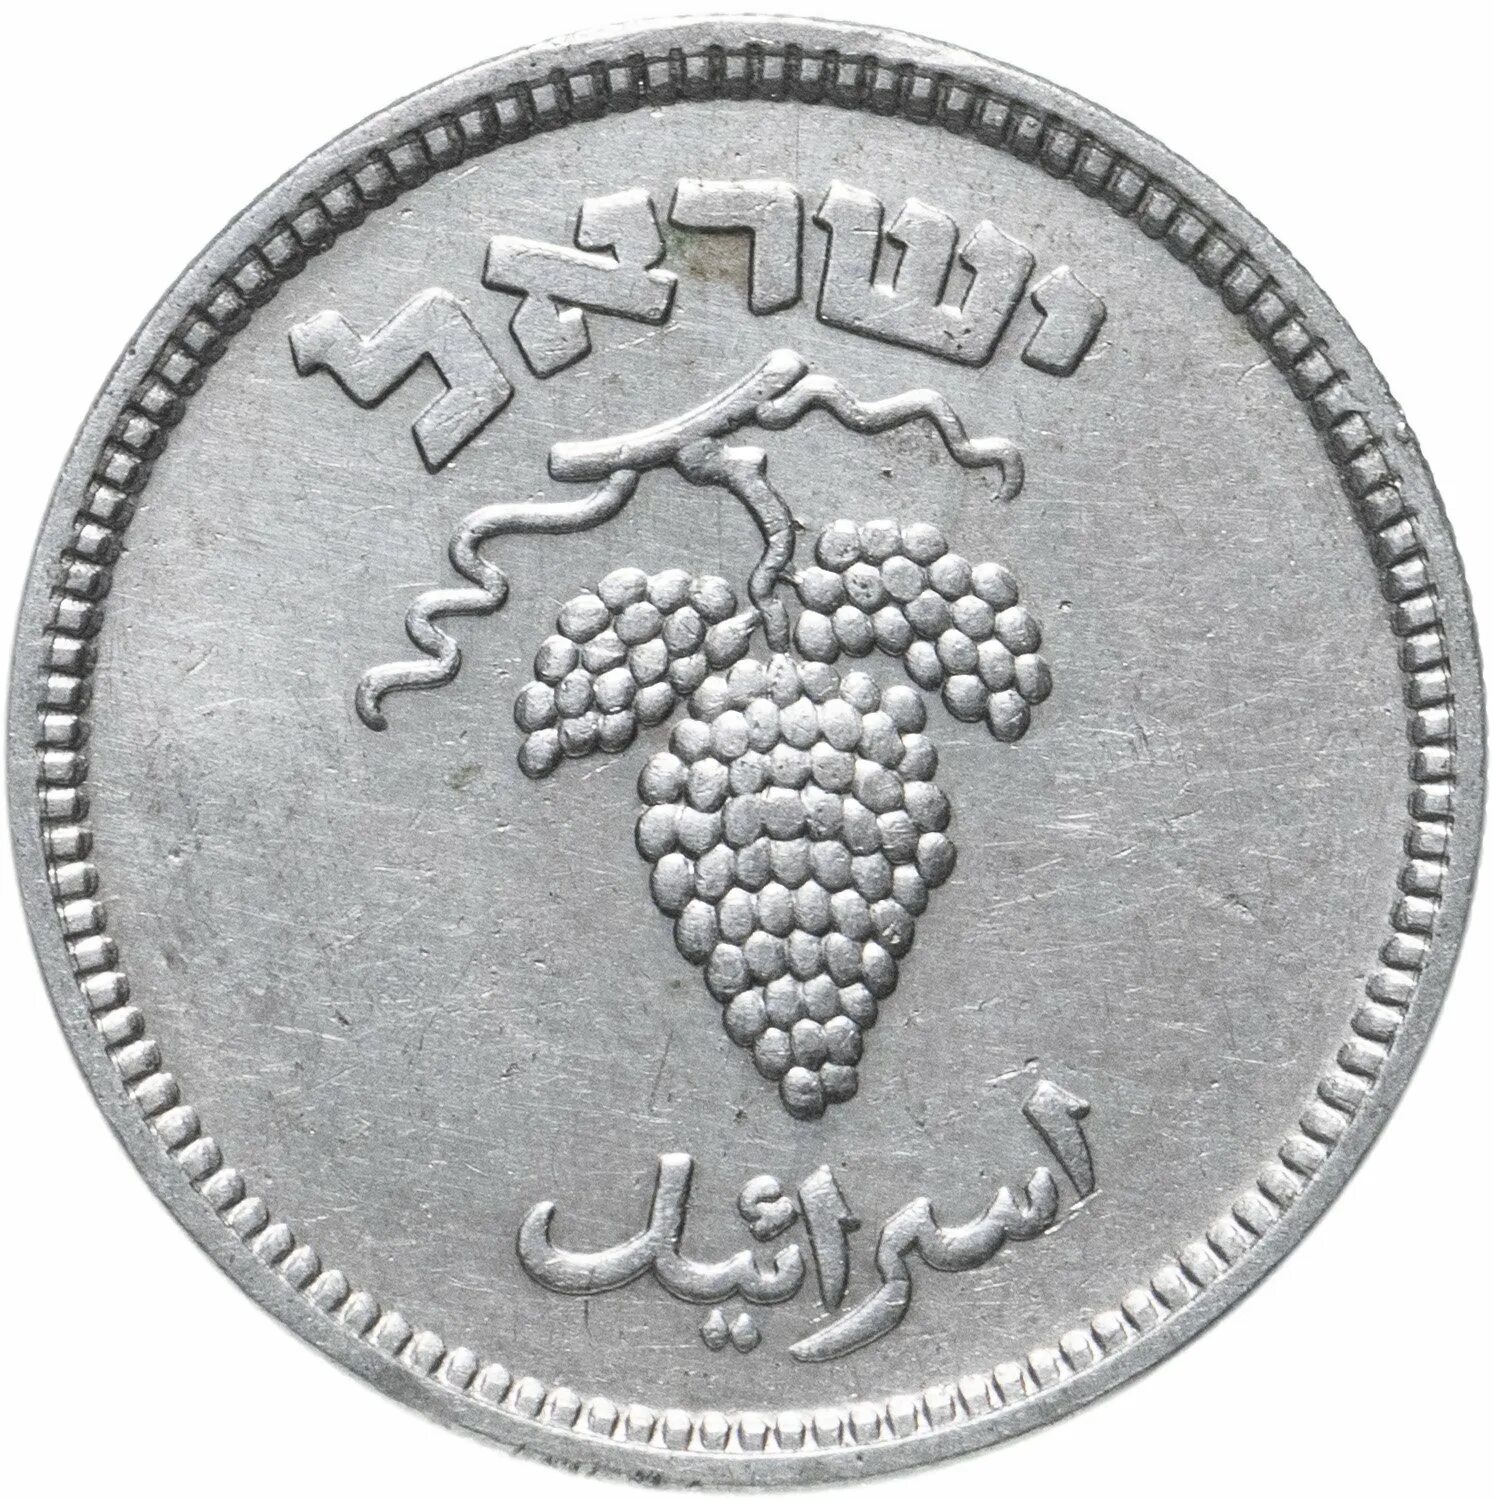 Монета израиля 4. Израильская монета 1994 25. Монеты Израиля с виноградной лозой. Монеты Израиля и древней Палестины. Монета Израиля с изображением Трампа фото.